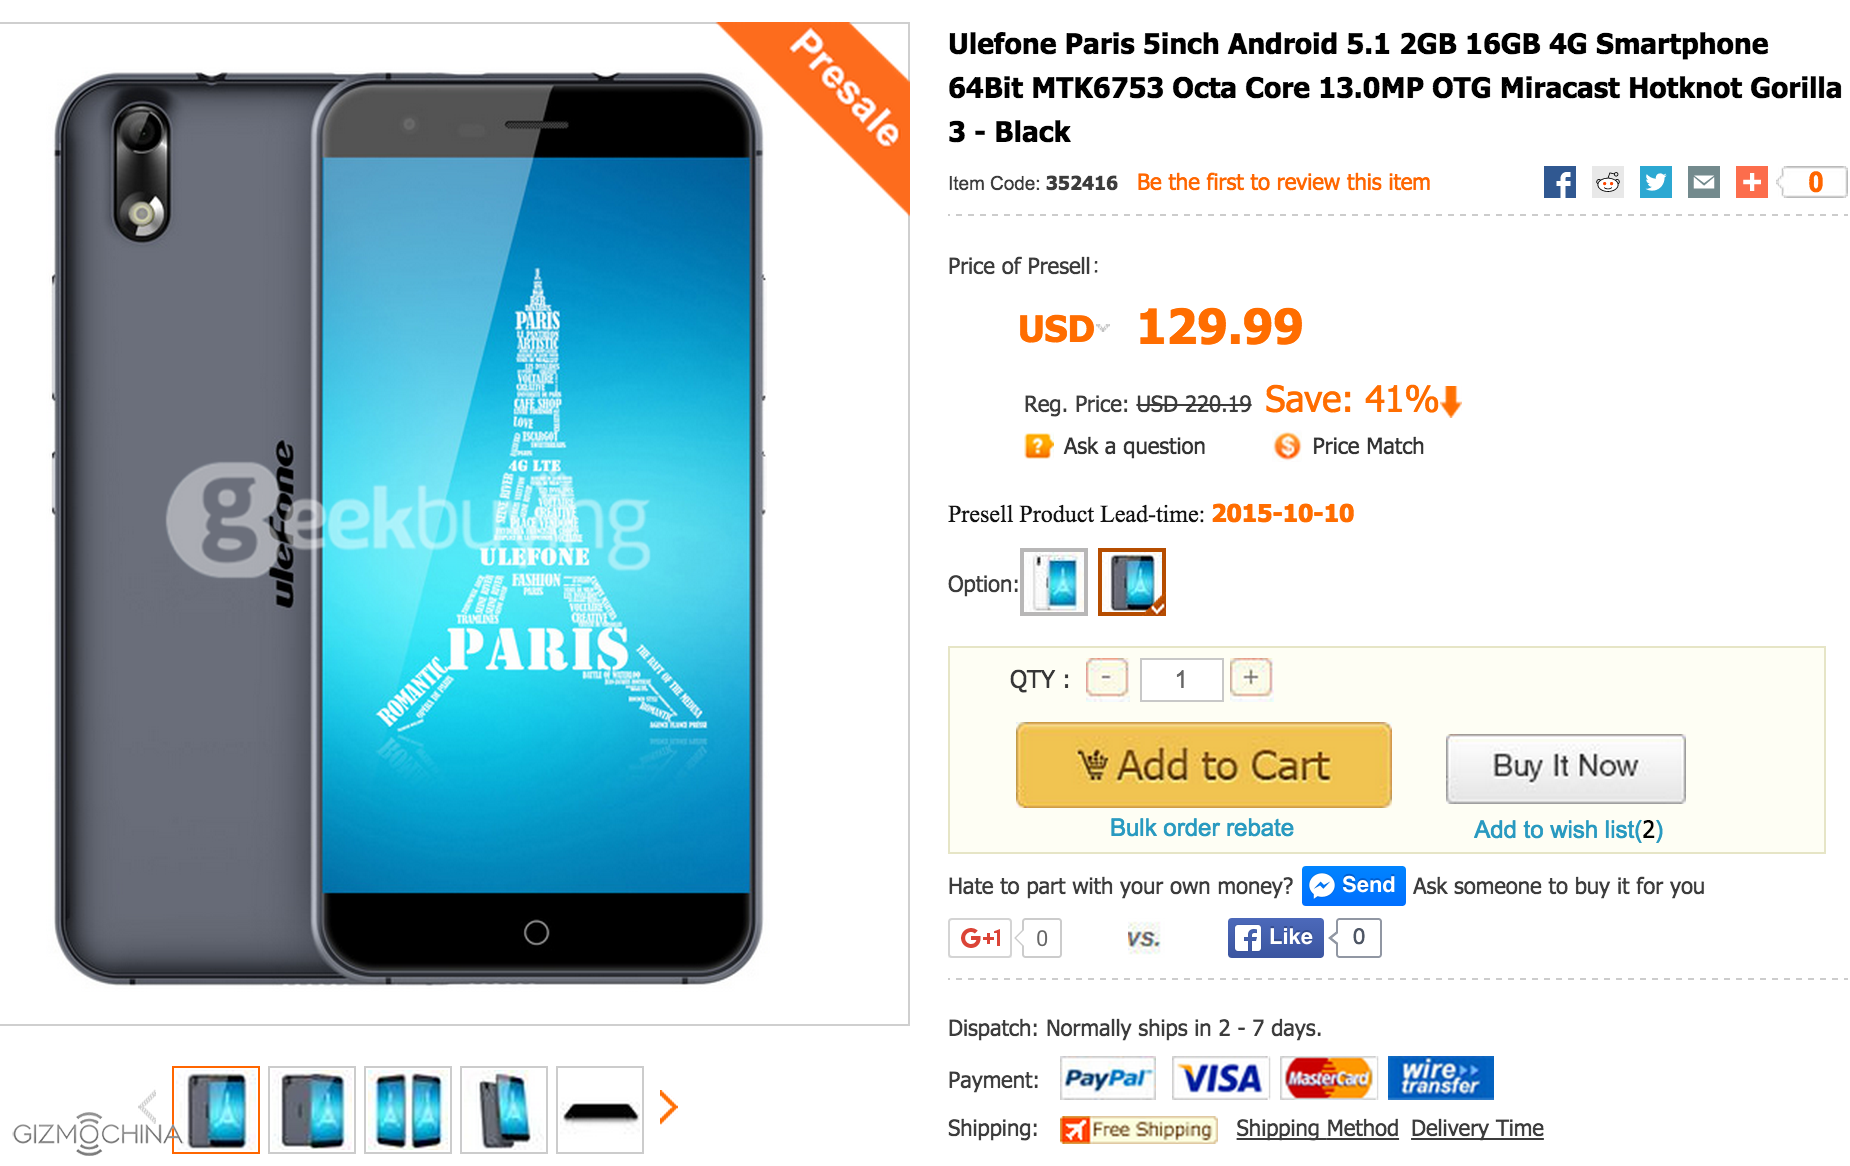 Ulefone Paris 5  Android 5.1 2GB 16GB MTK6753 Smartphone